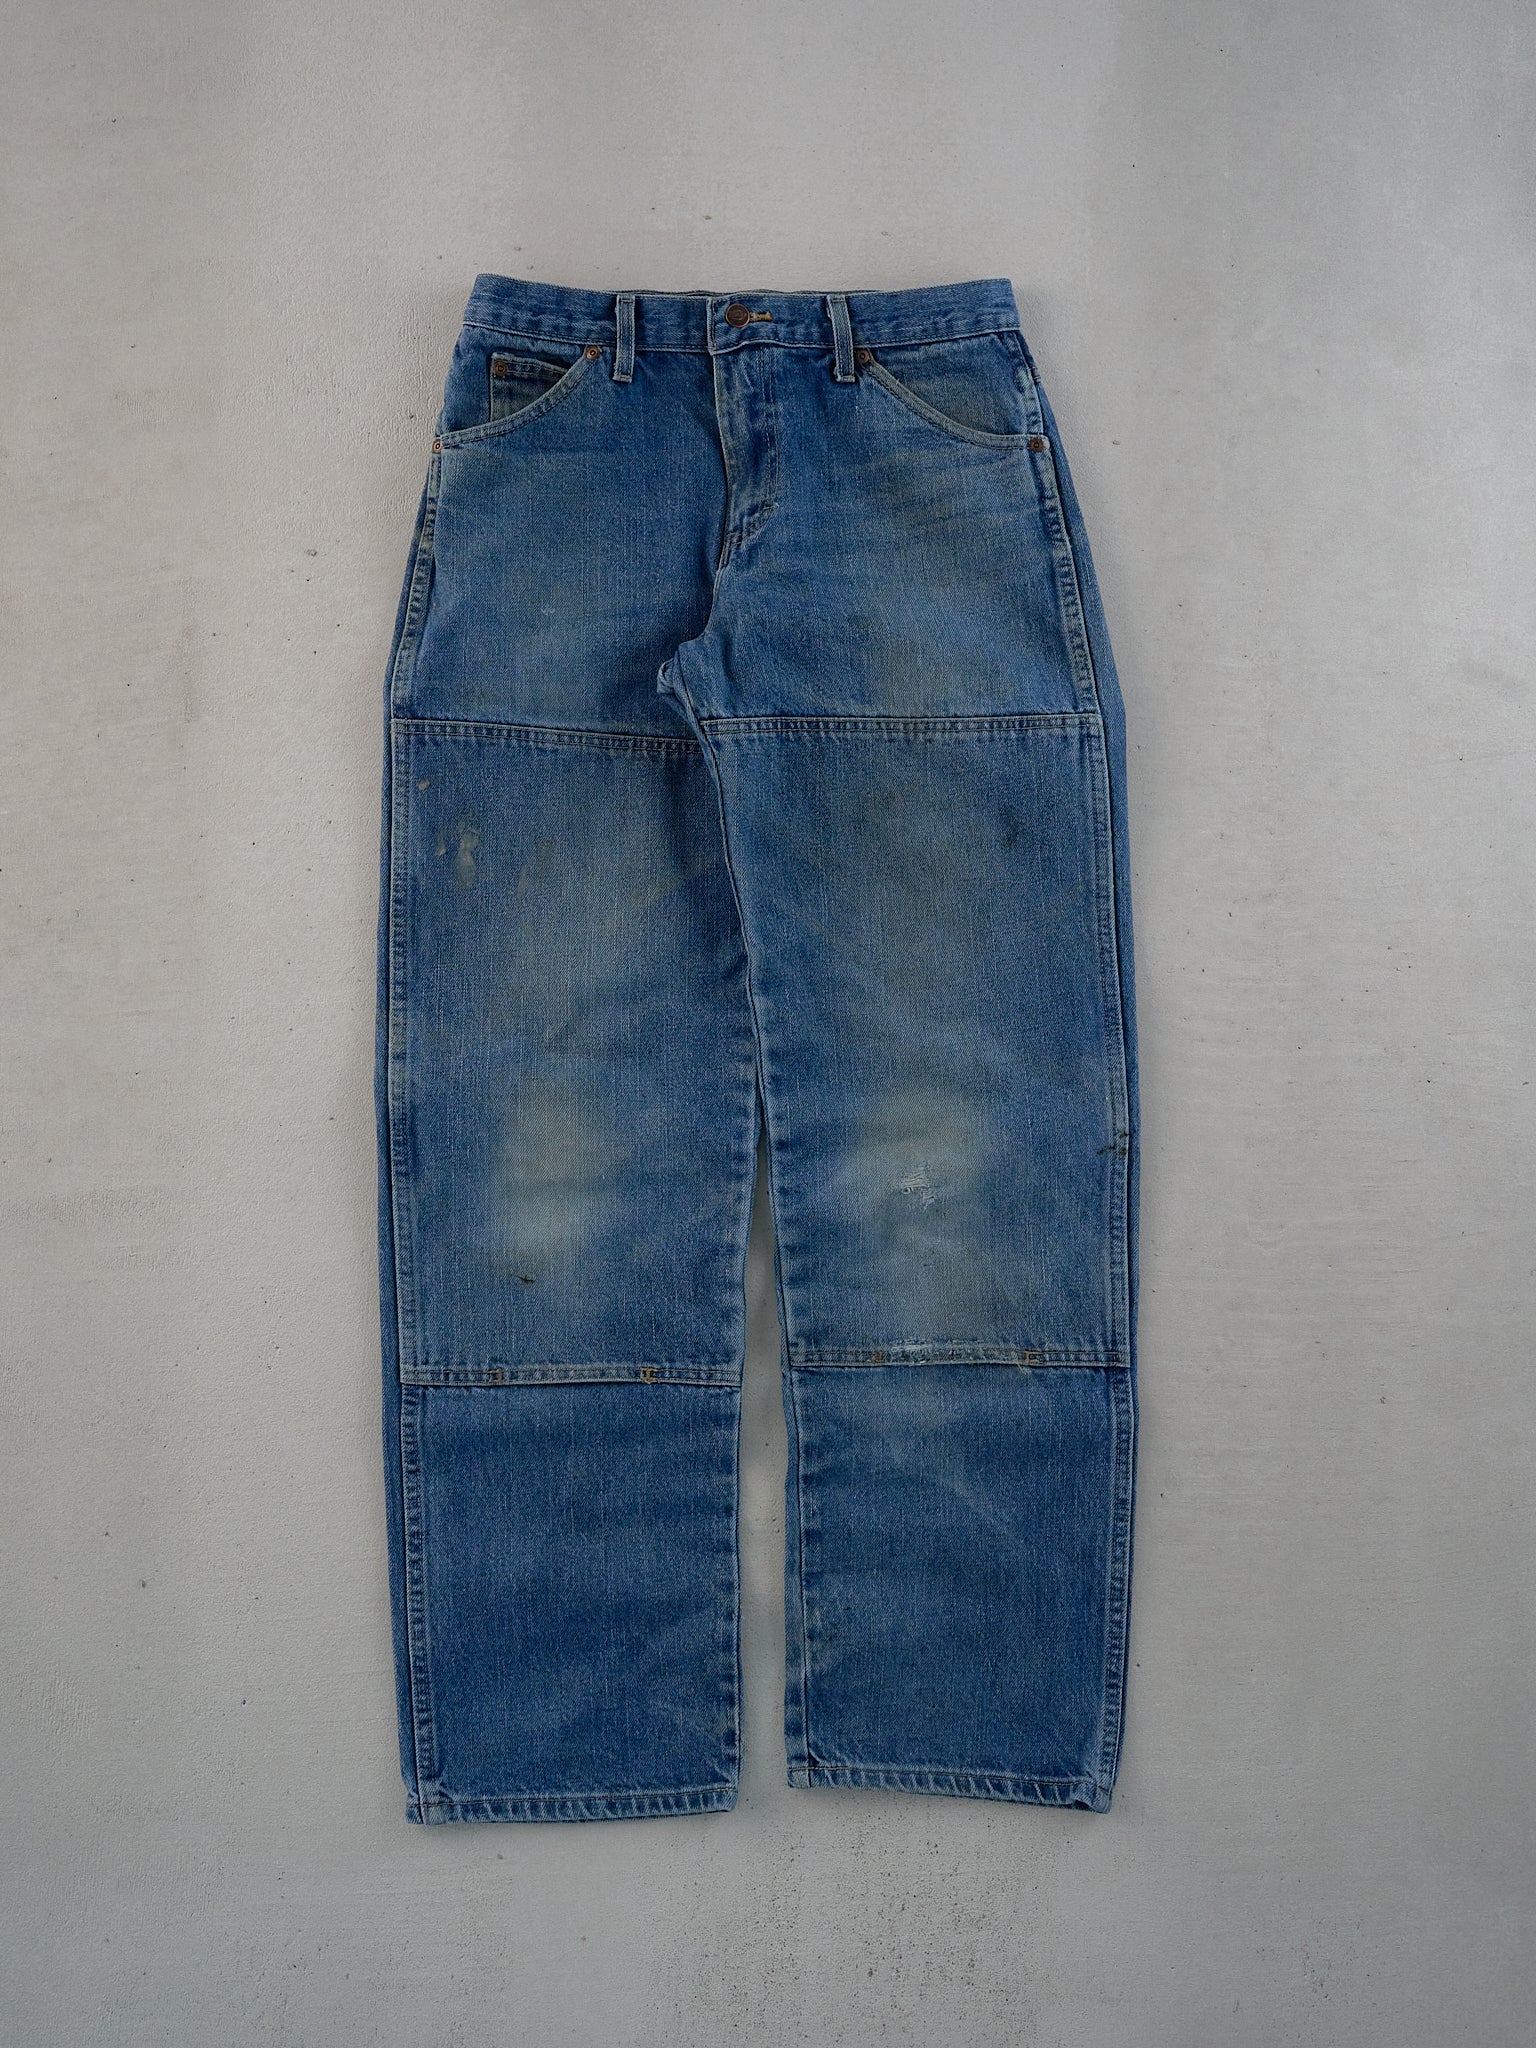 Vintage 90s Blue Dickies Denim Double Knee Carpenter Pants (29x31)